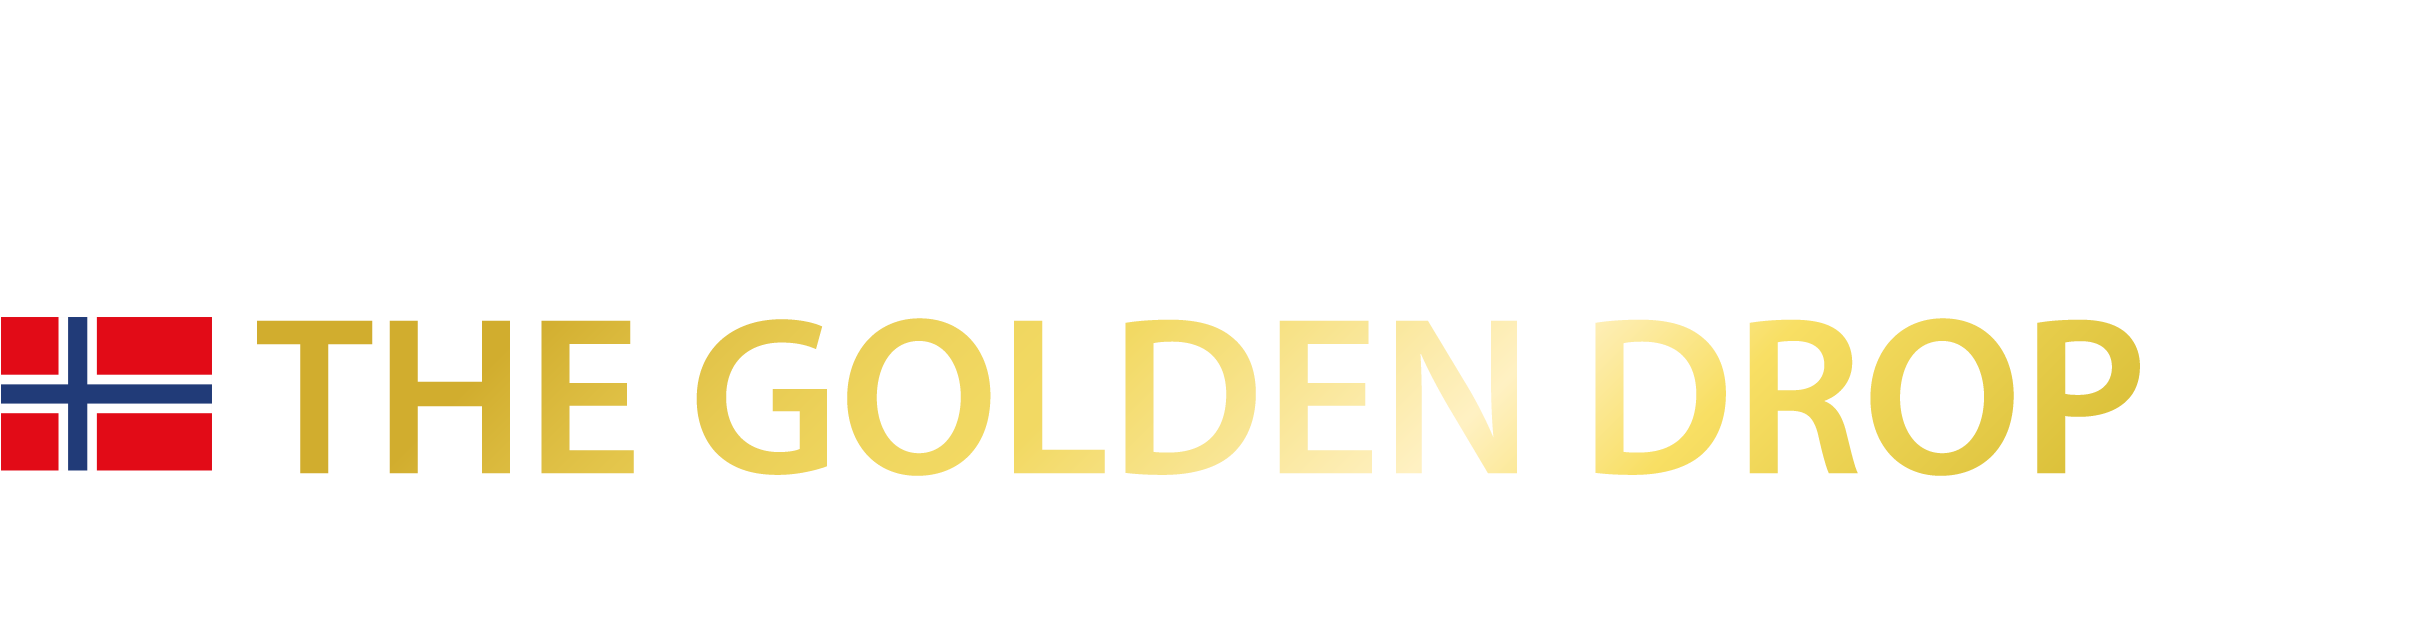 Möllers Cod Liver Oil – The Golden Drop